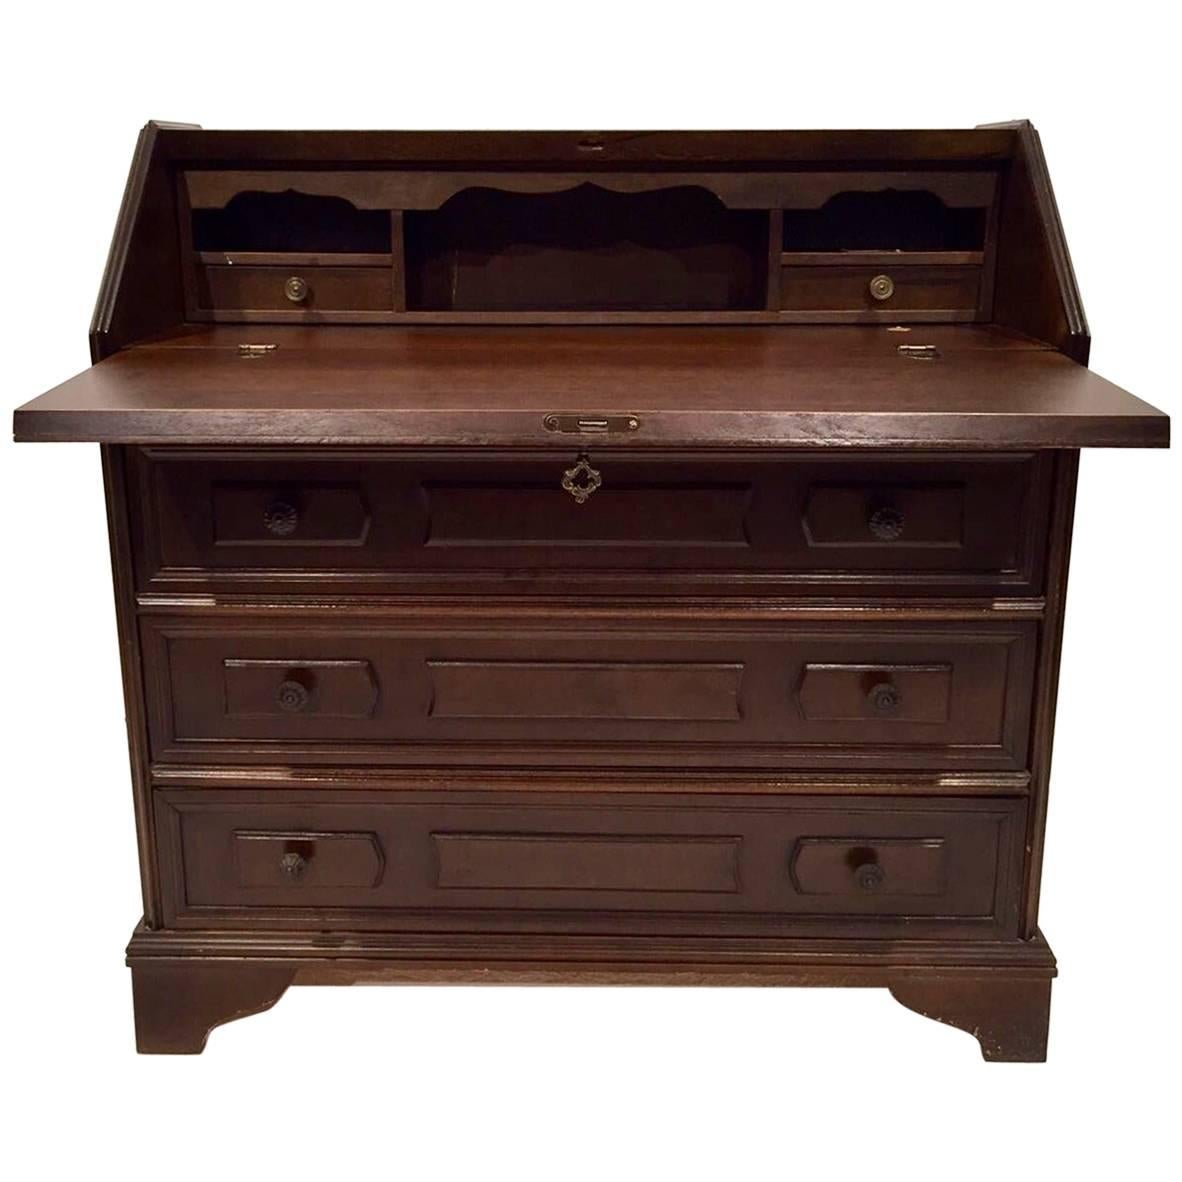 Antique Small Secretary Desk in Wood For Sale